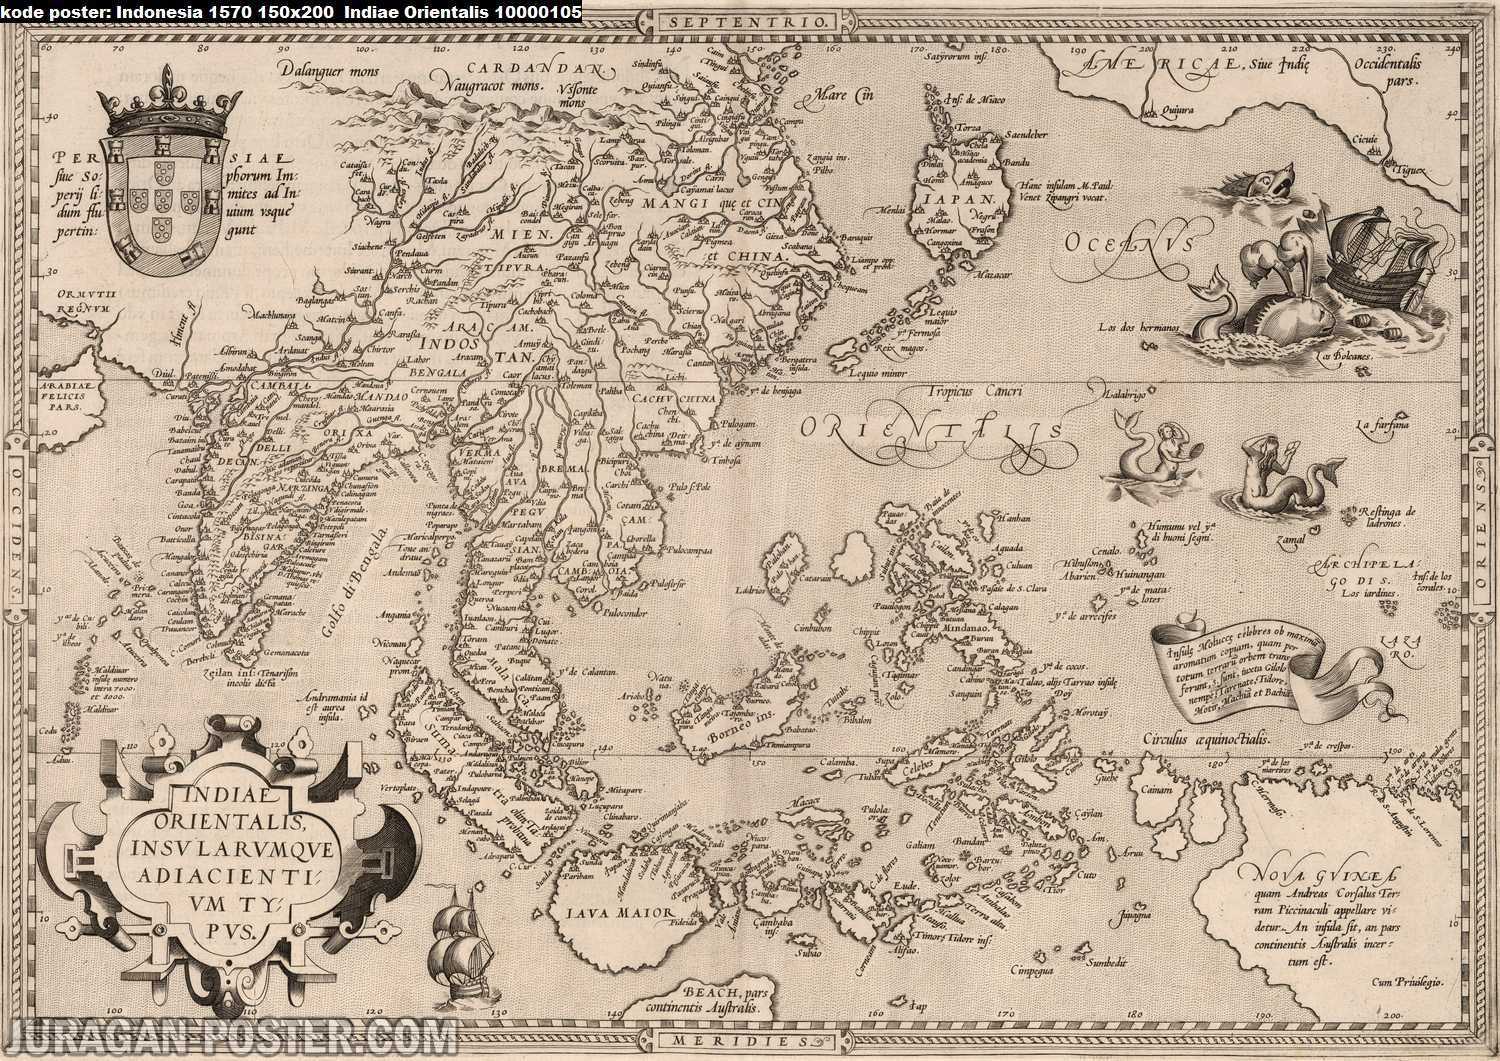 peta indonesia kuno tahun 1570